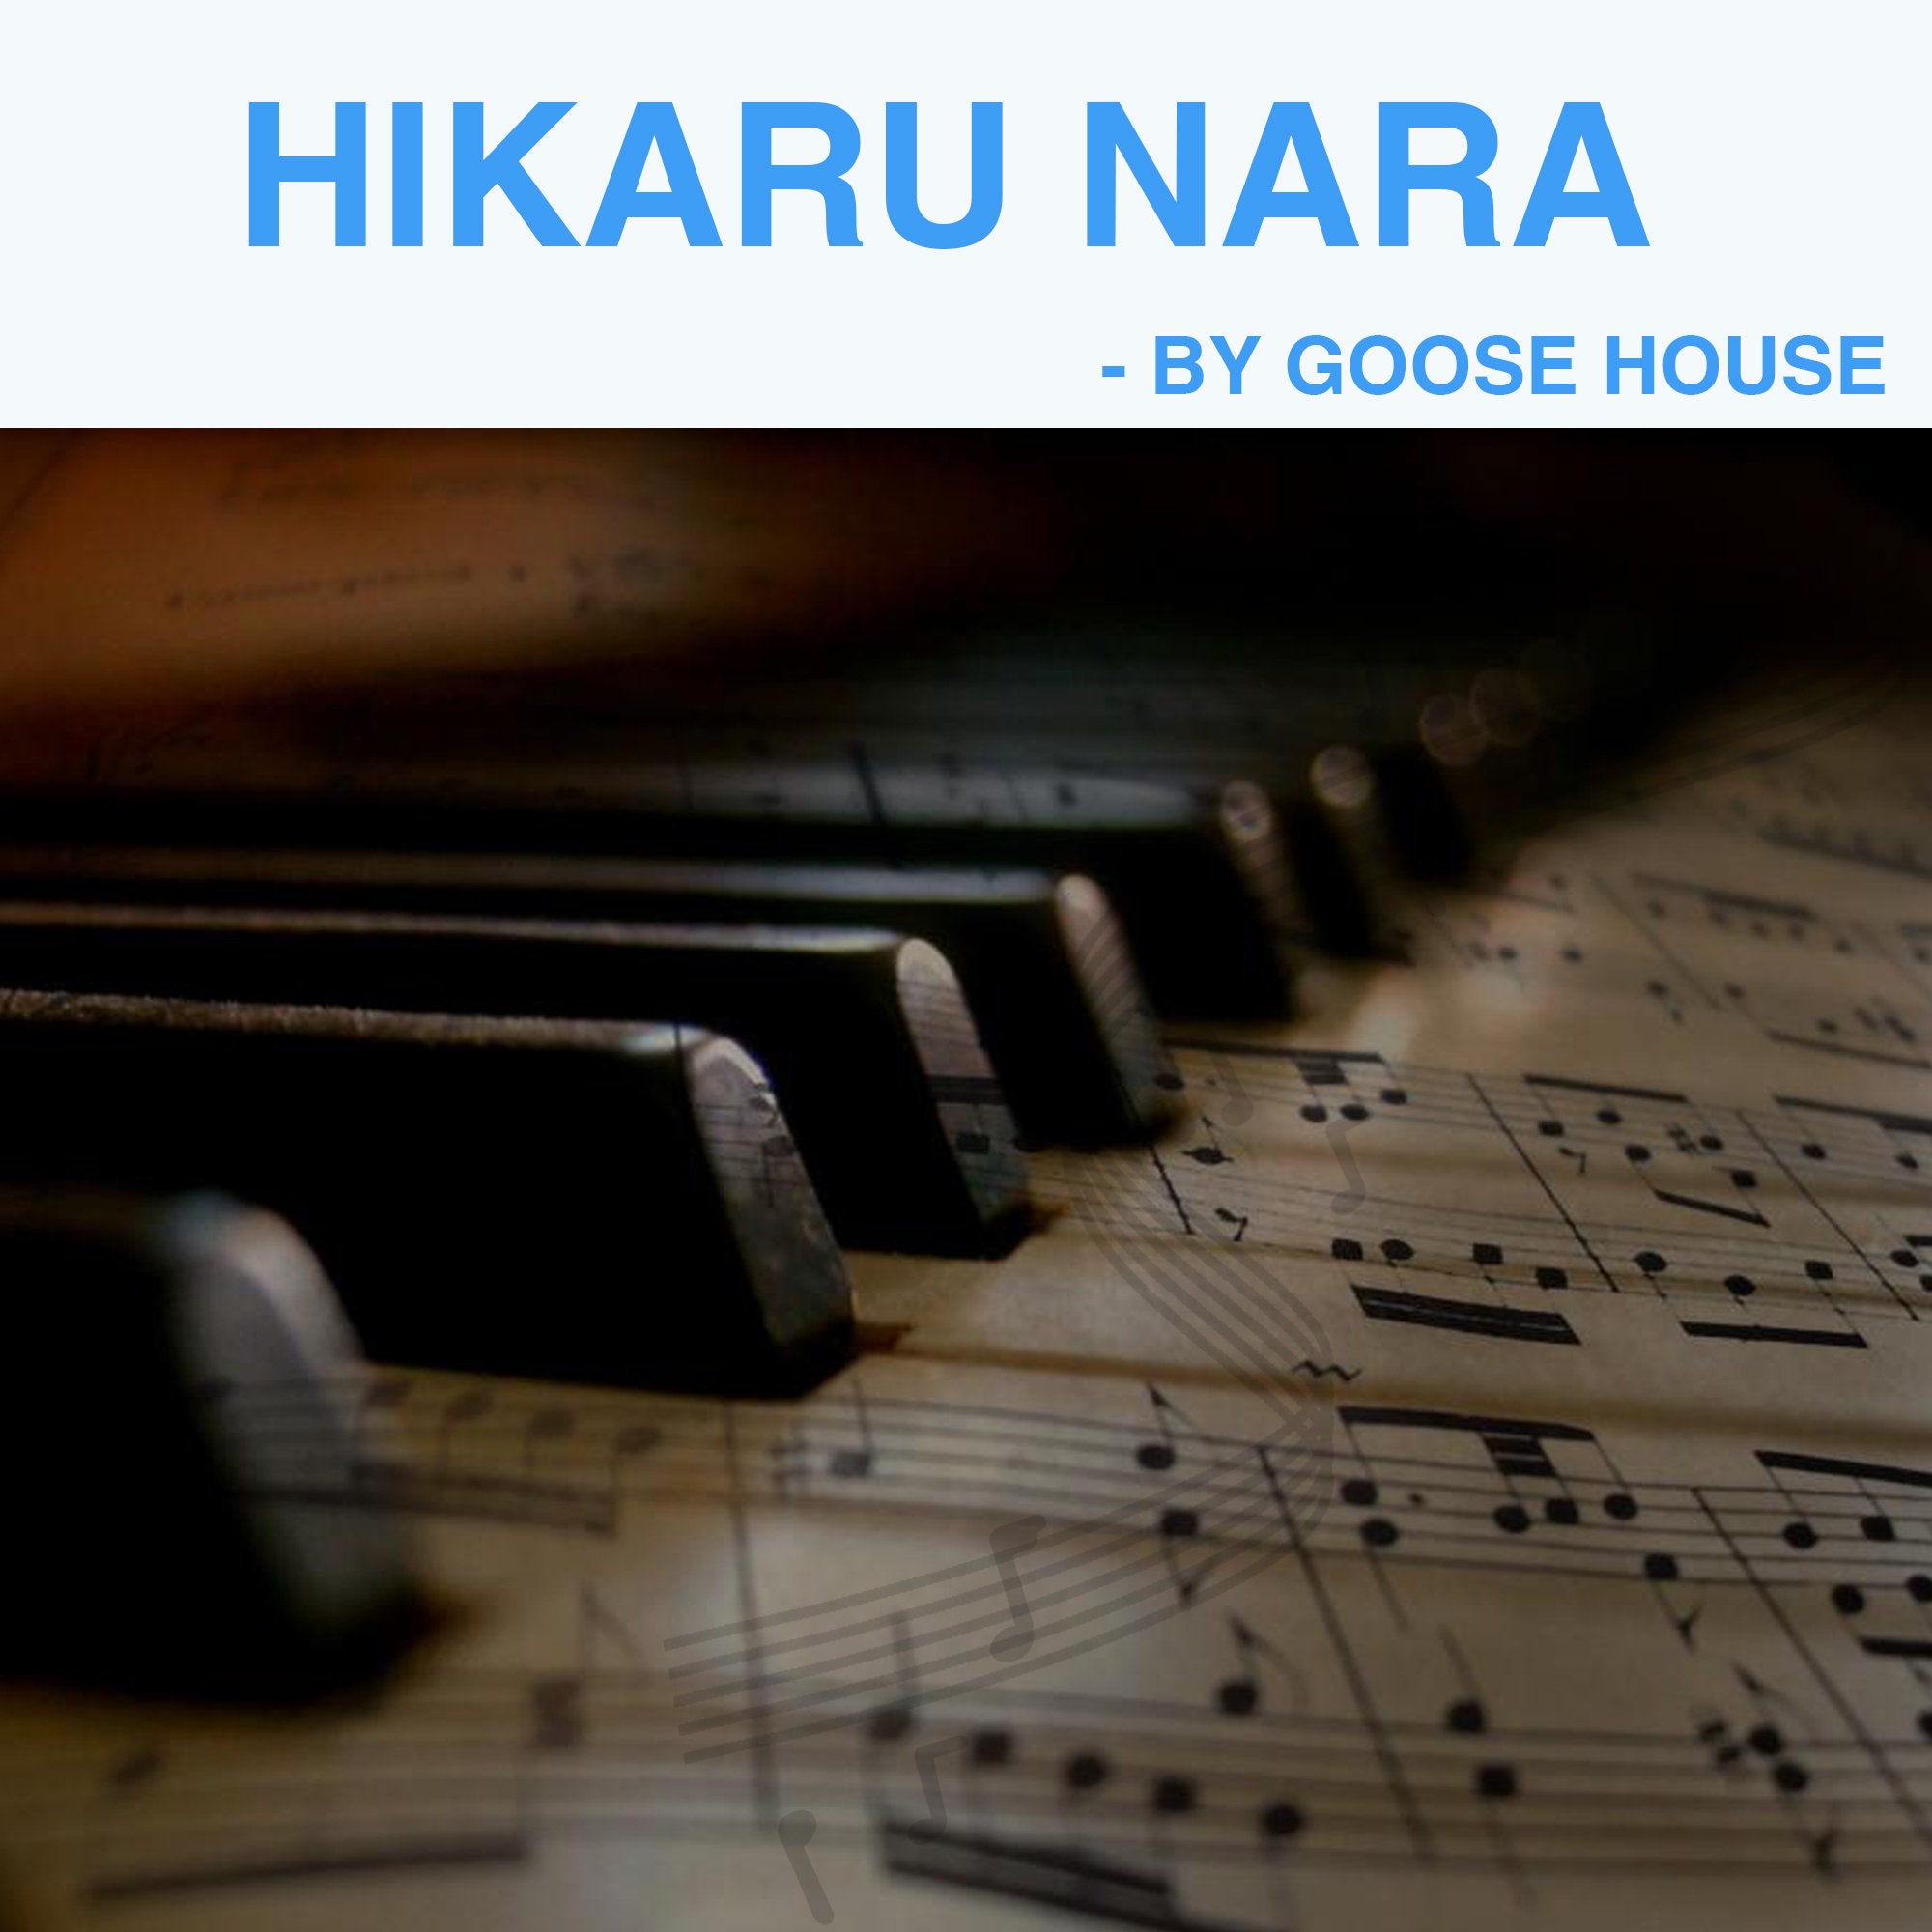 Hikaru Nara Sheet Music by Goose House for Piano/Keyboard